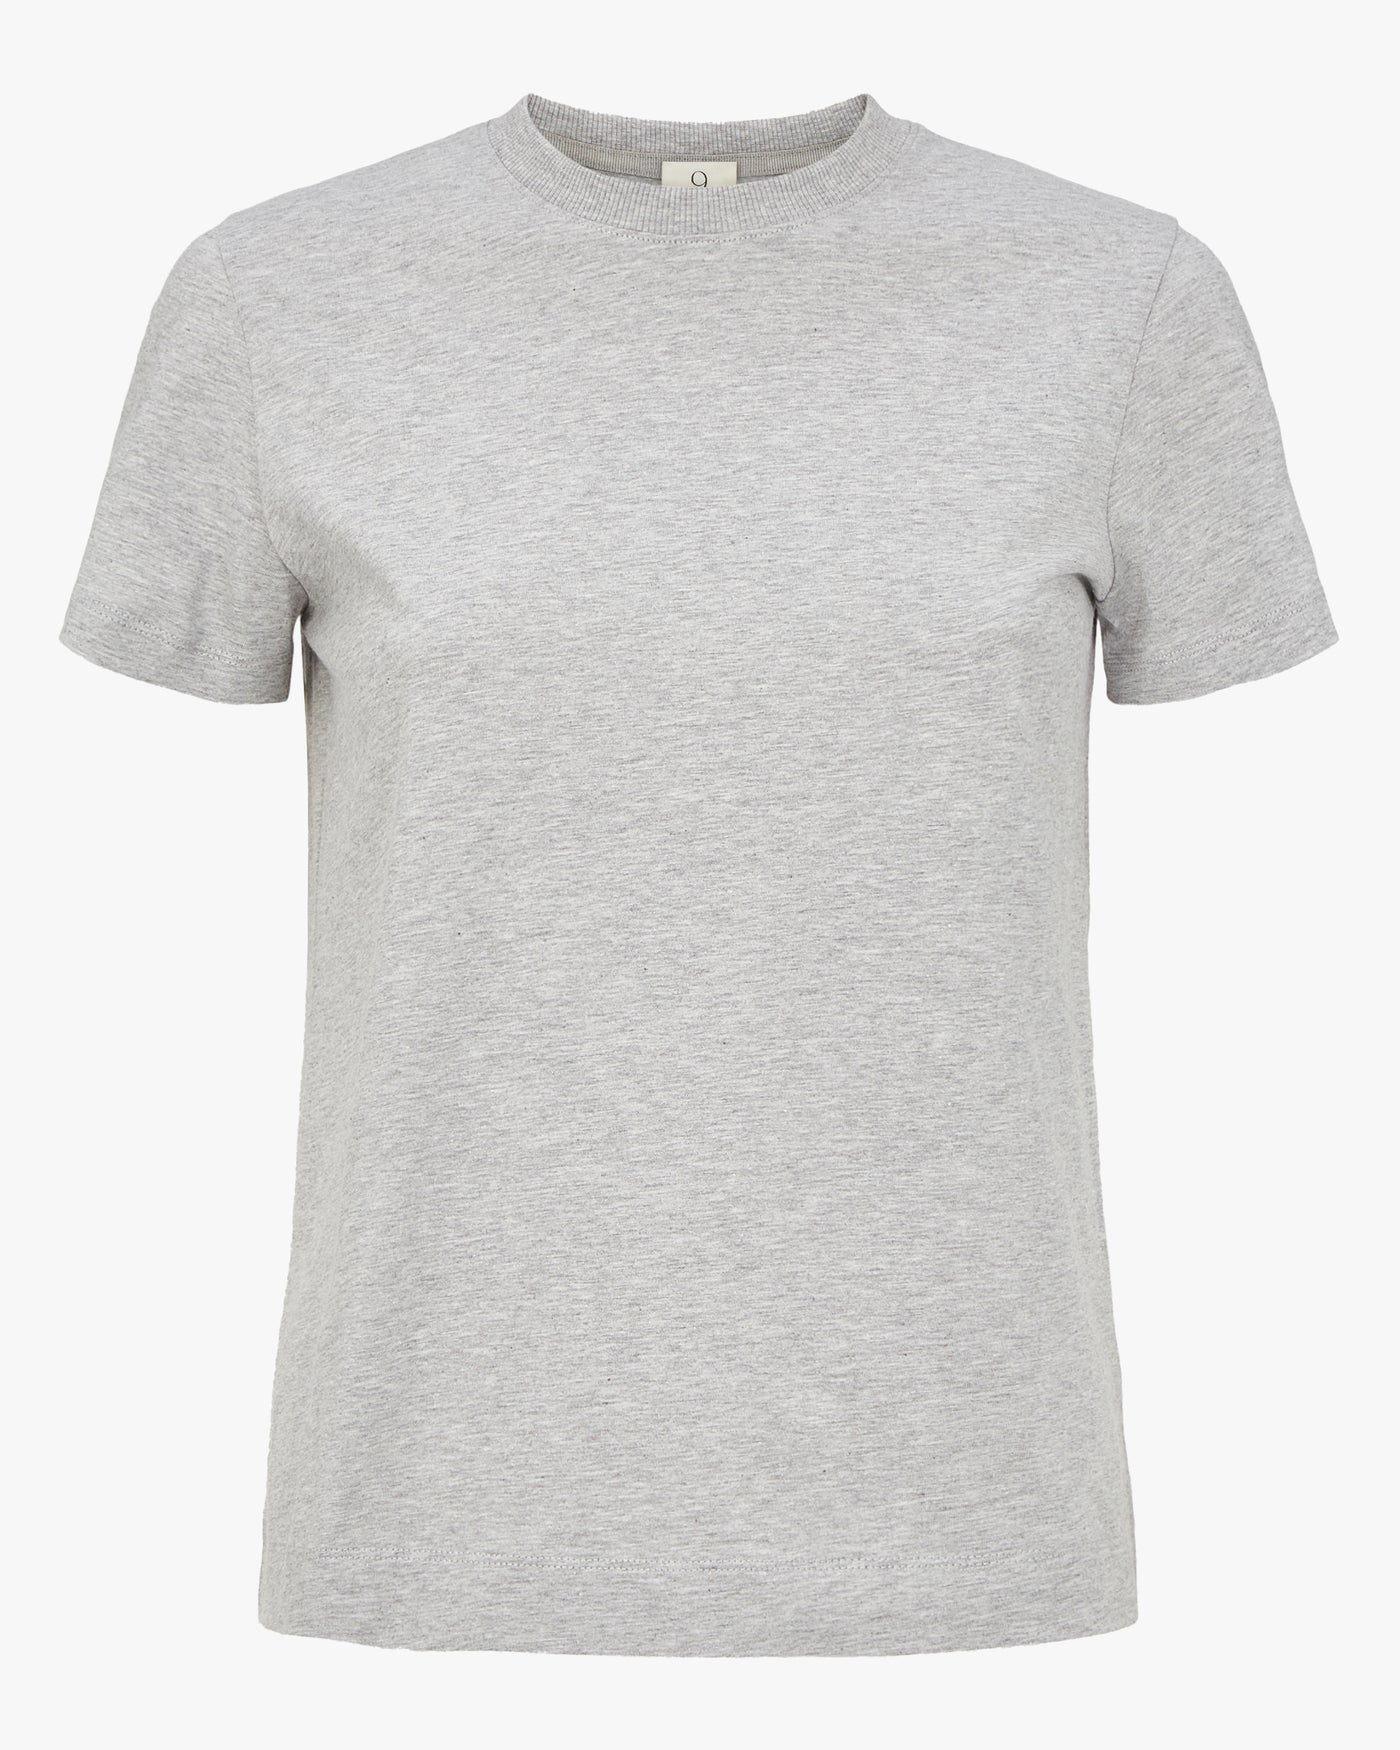 Drew T-Shirt in Grey Marl